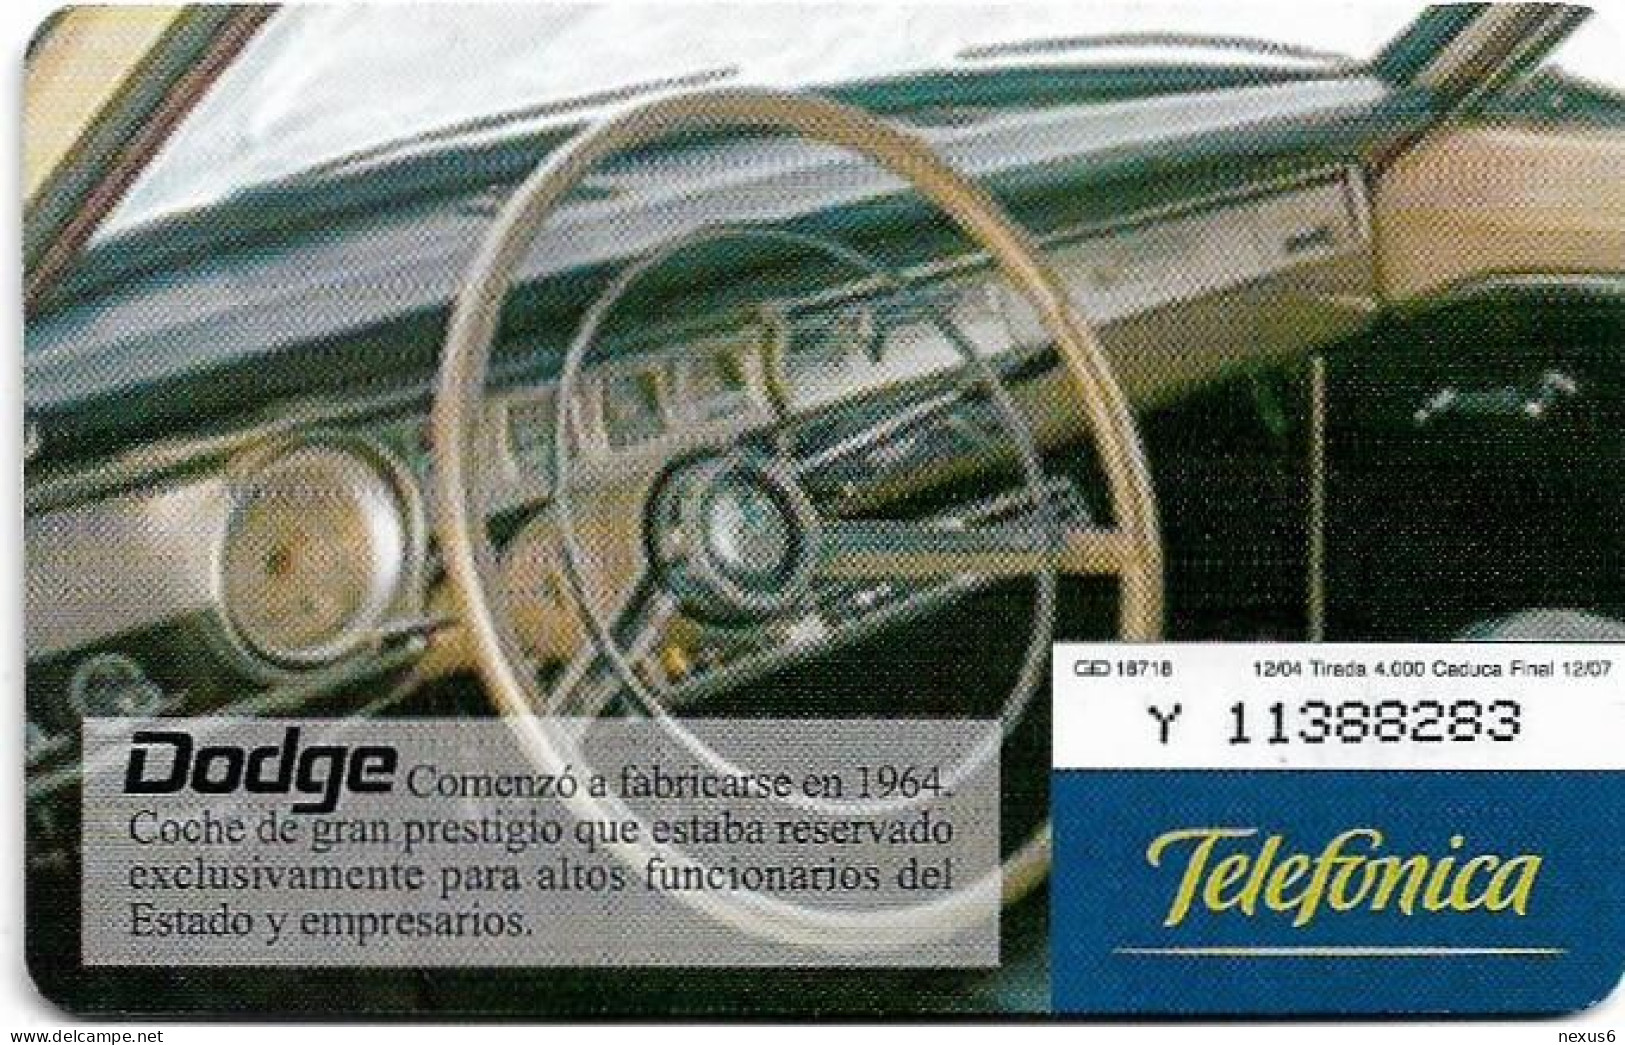 Spain - Telefónica - Coches Con Encanto - Dodge - P-560, 12.2004, 3€, 4.000ex, Used - Private Issues